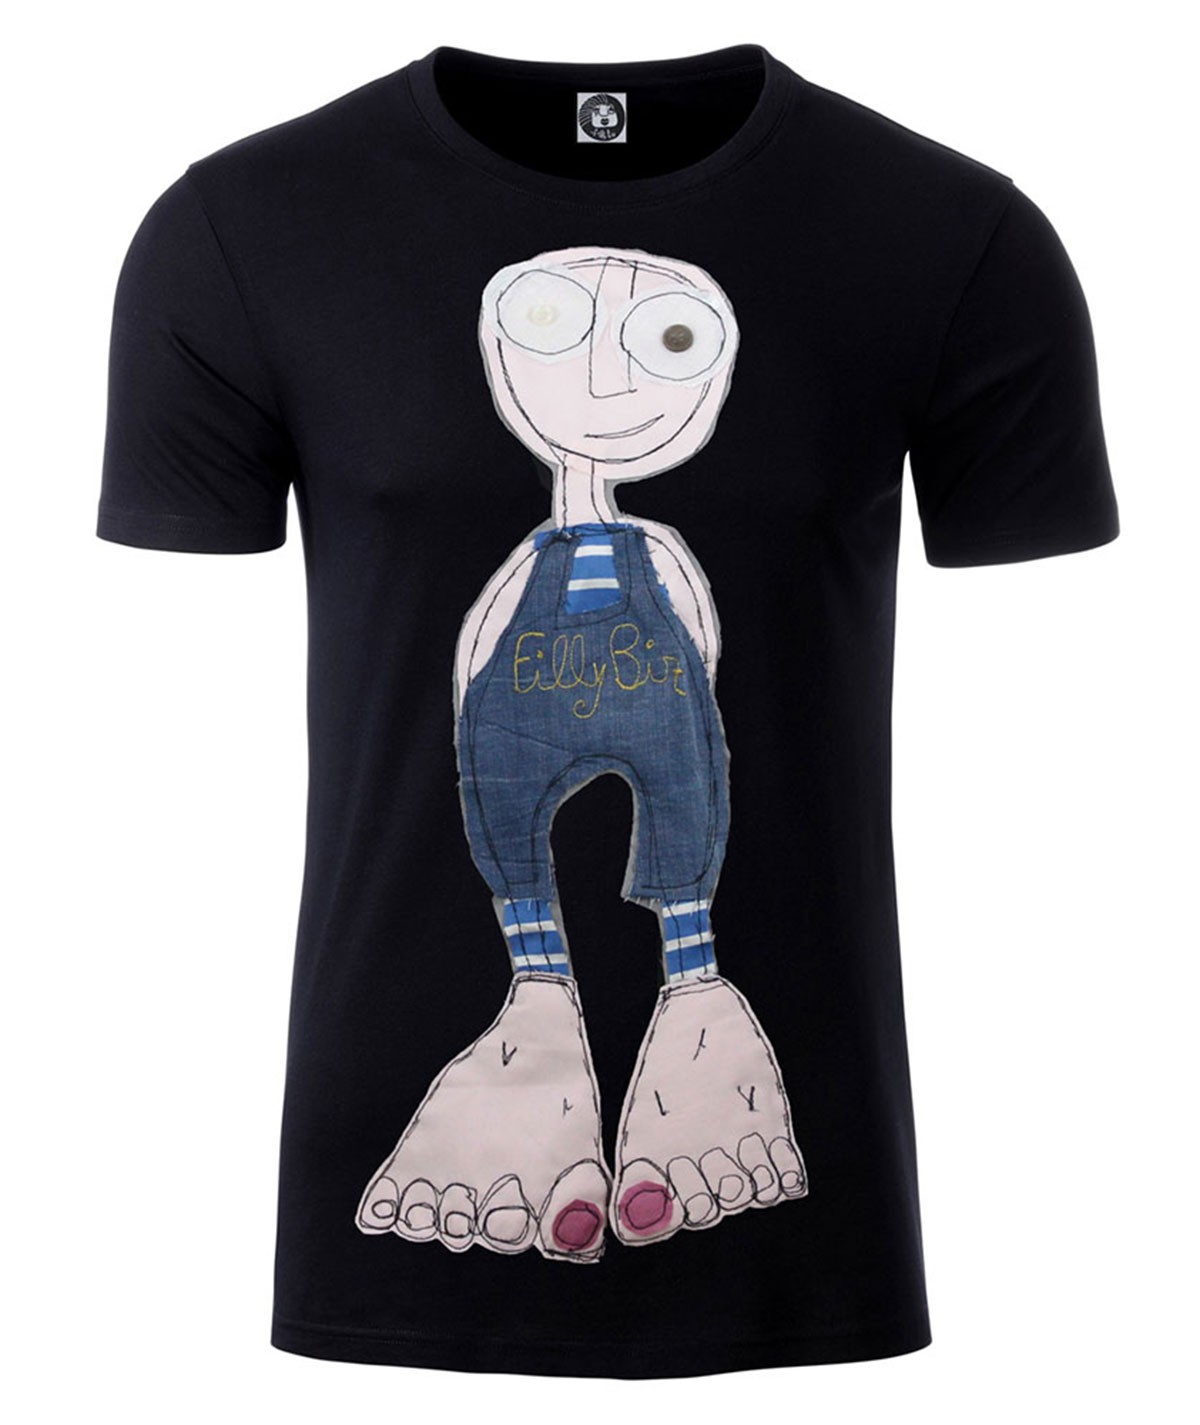 T-shirt with the big feet boy